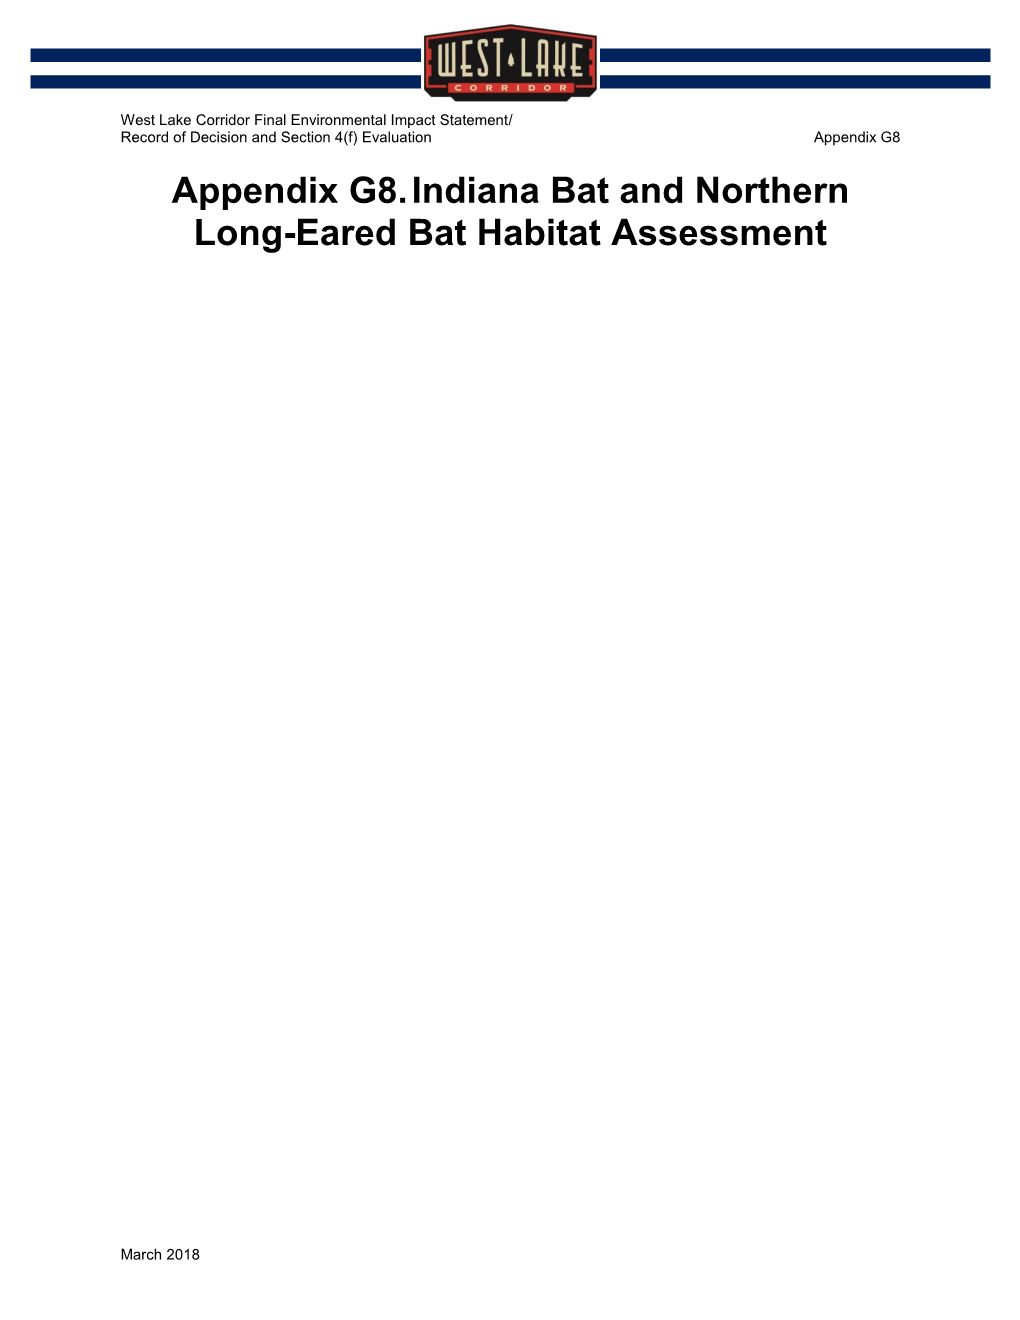 Indiana Bat & Northern Long-Eared